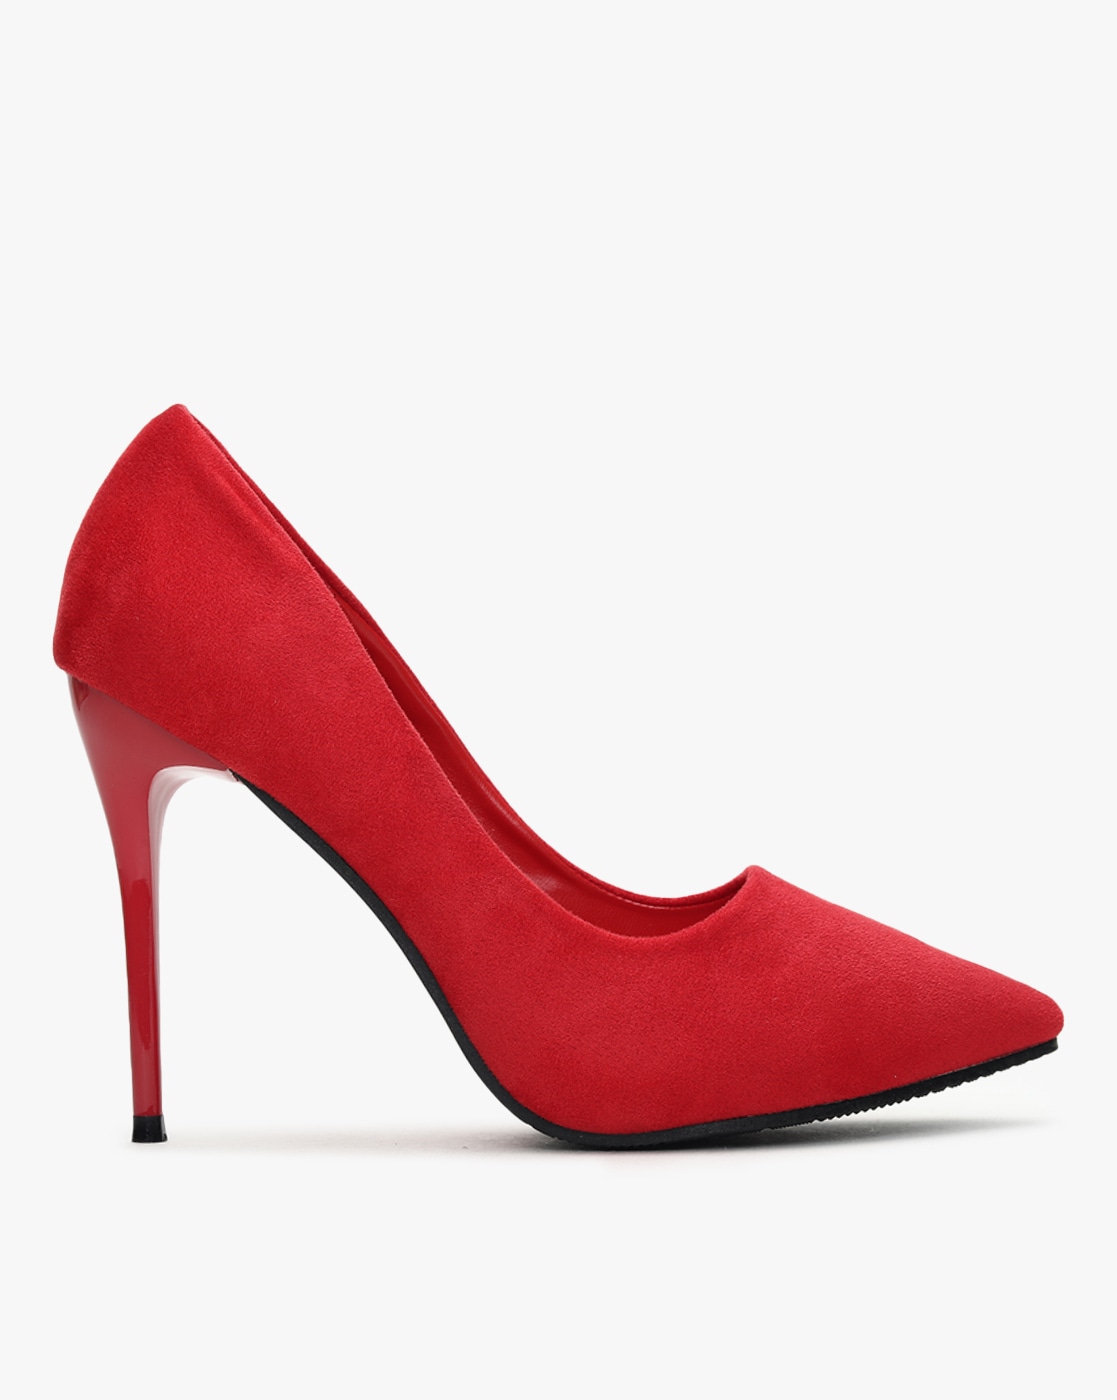 A Stylish Way to Wear Red Heels - Fashion Jackson